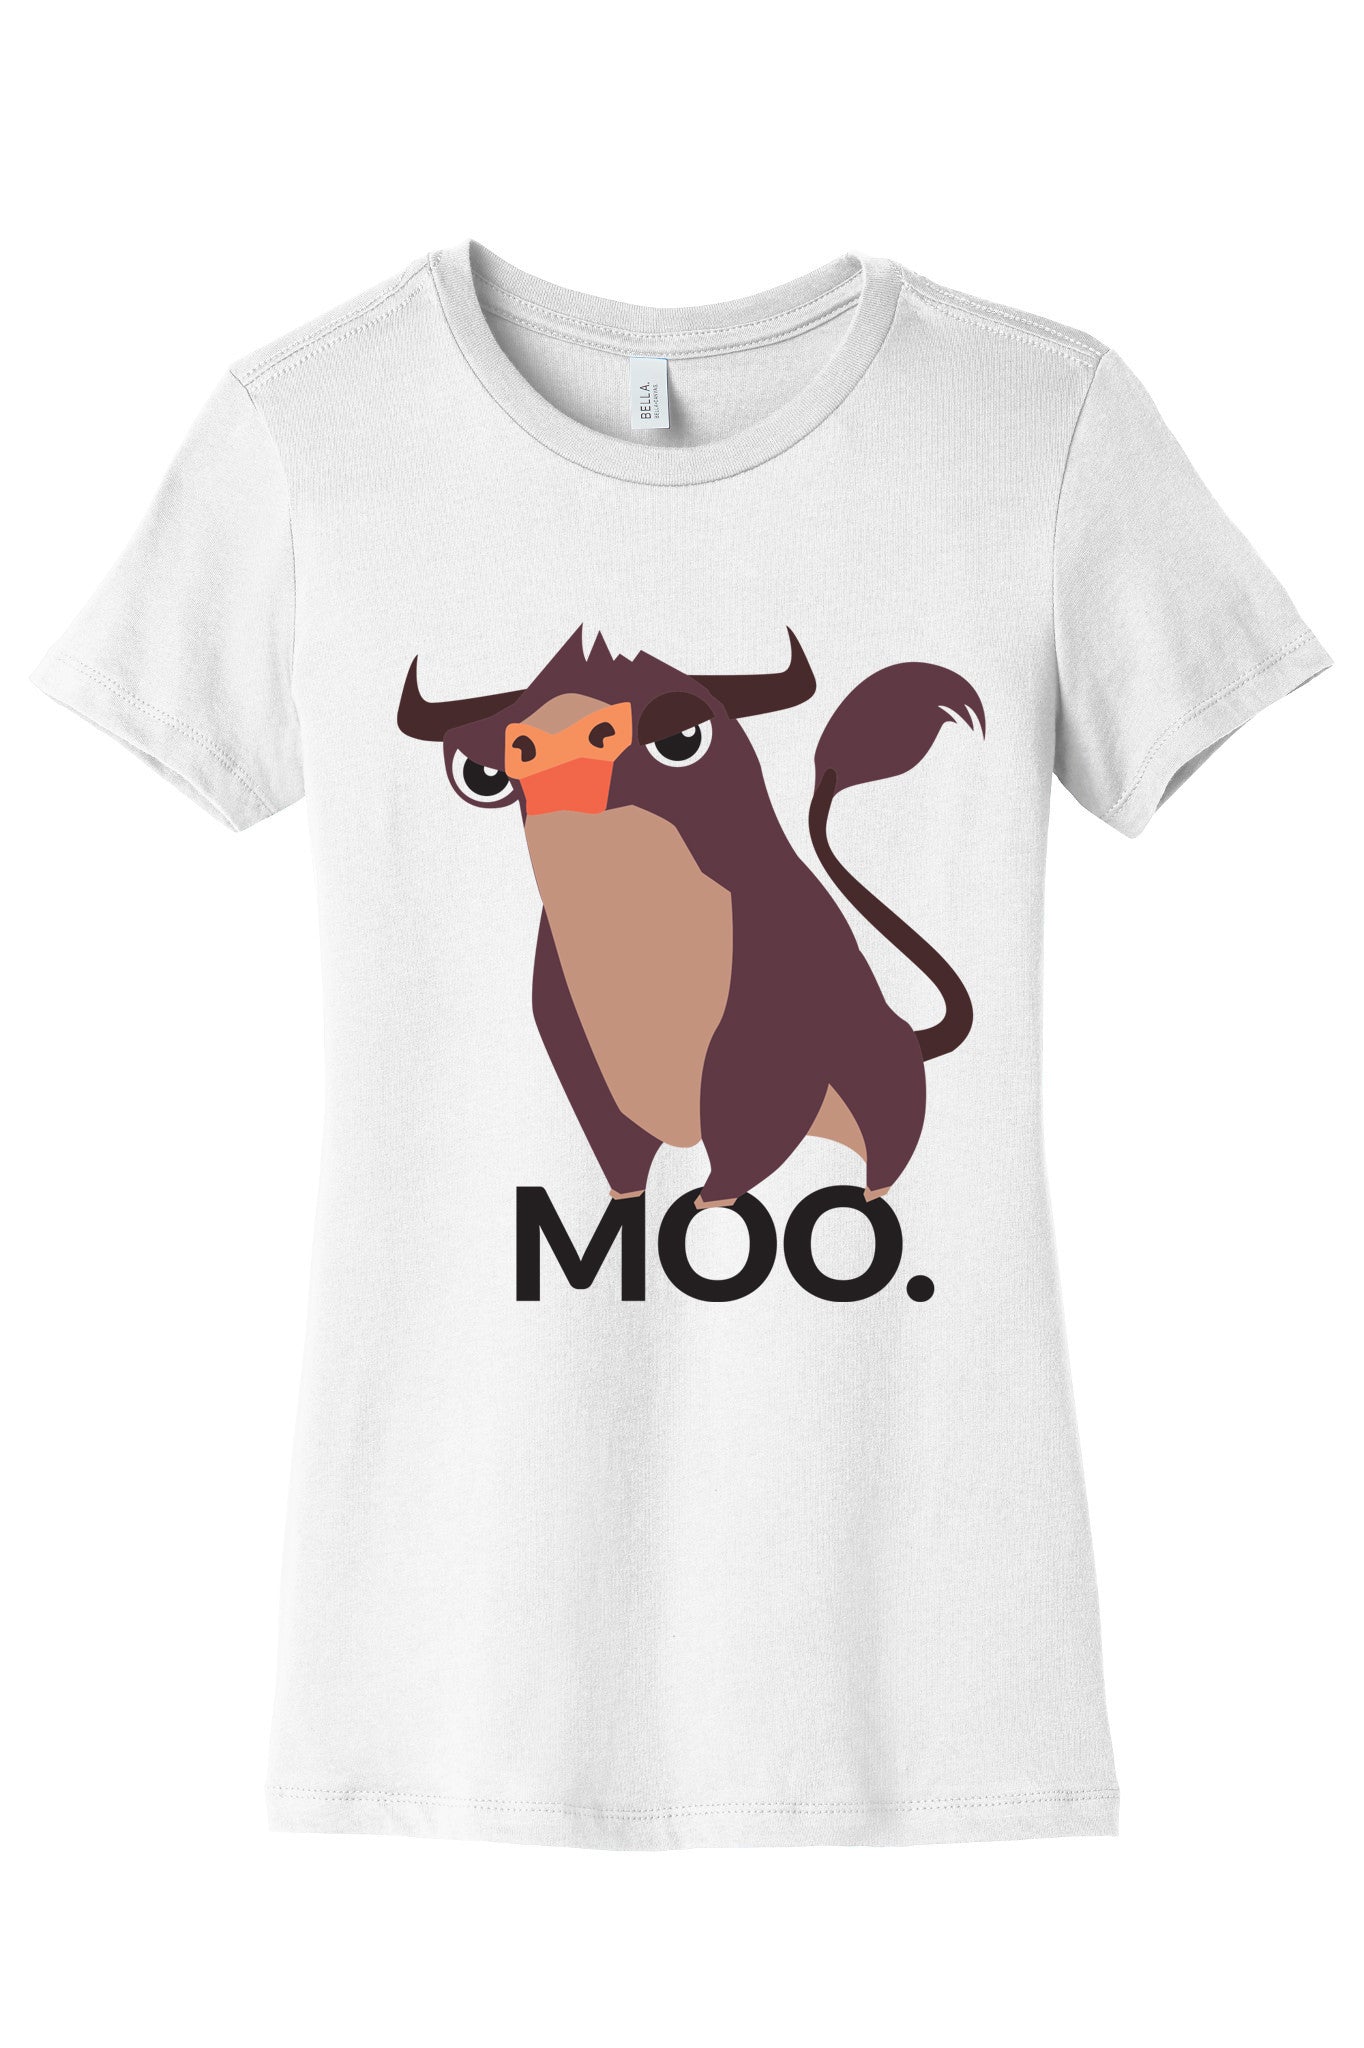 Moo The Bull